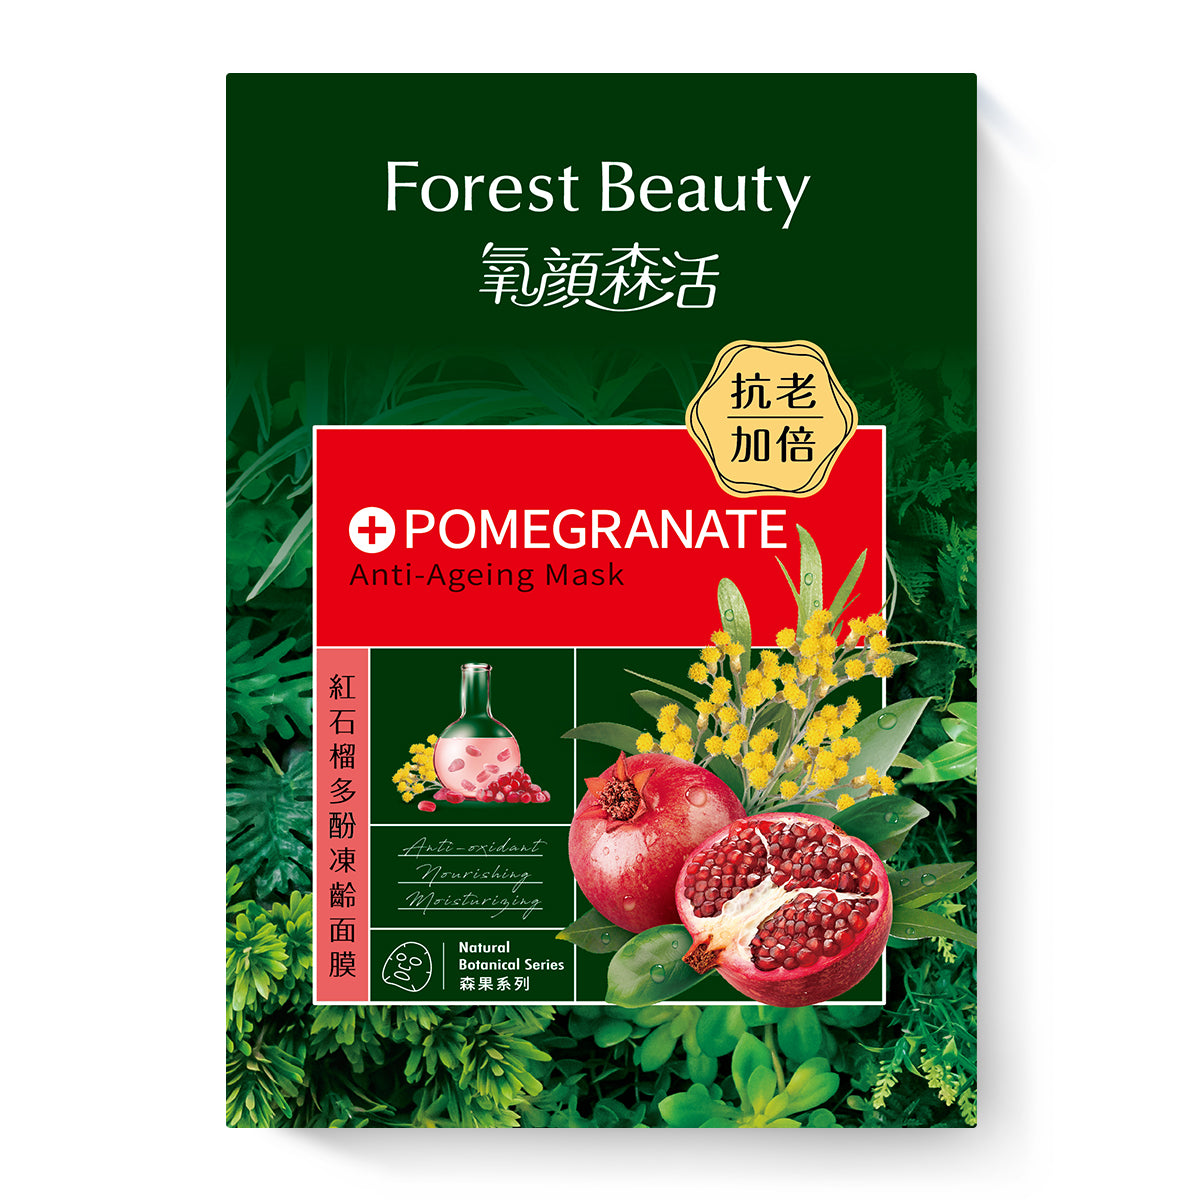 Forest Beauty Pomegranate Anti-Ageing Mask - ShopChuusi